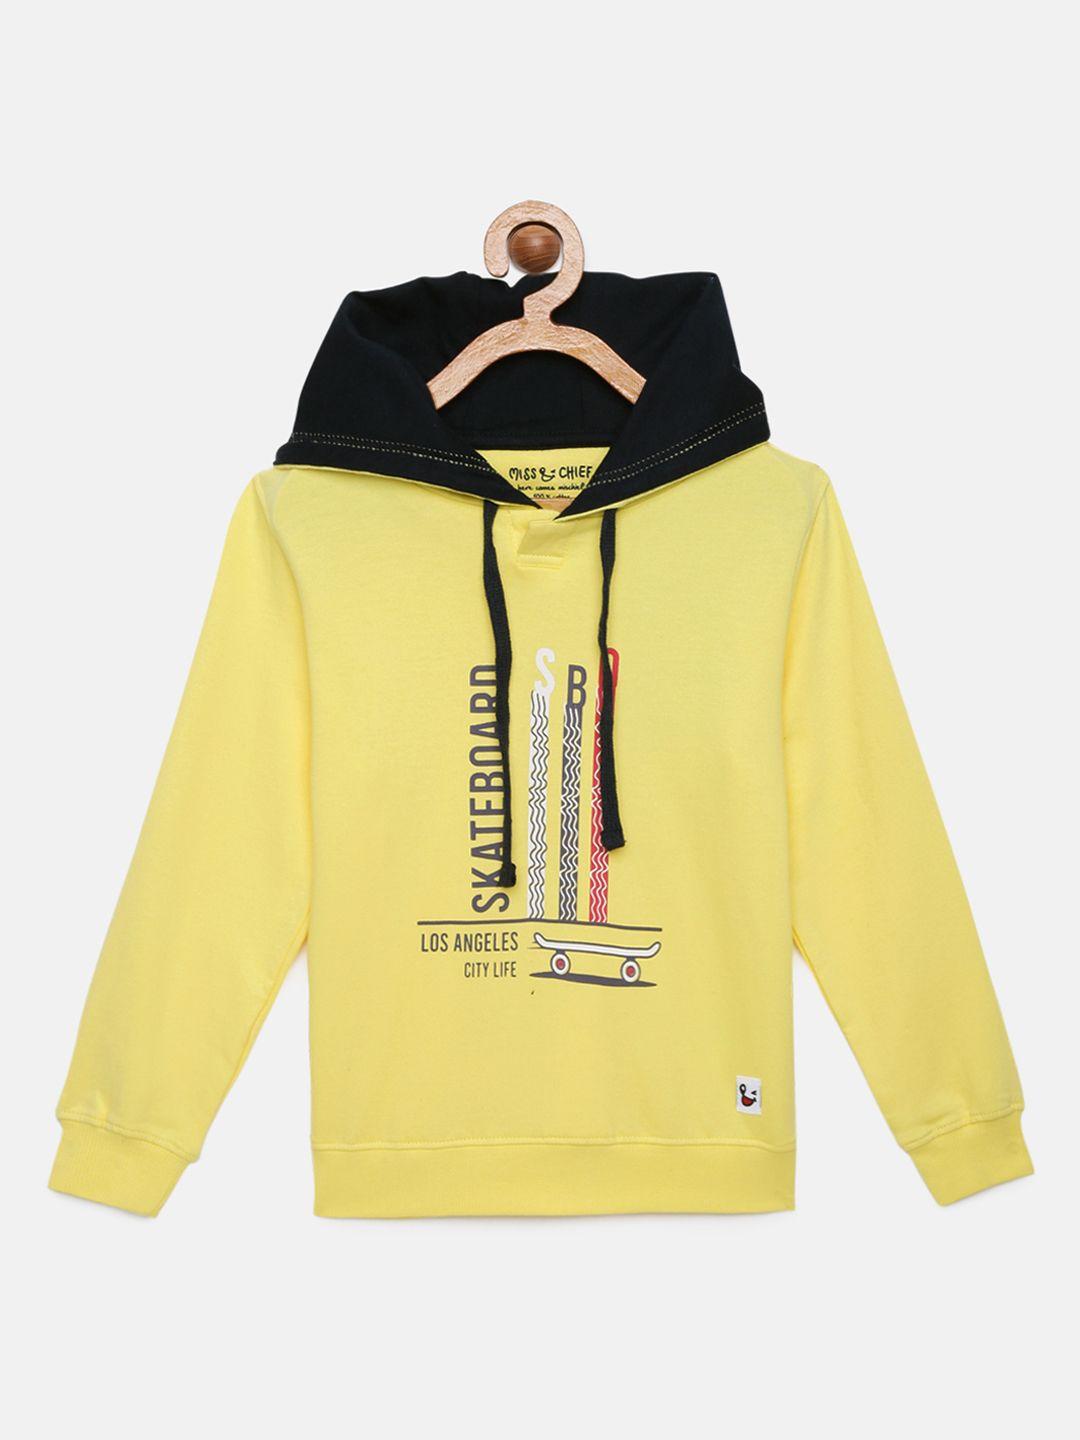 miss & chief boys yellow printed pure cotton hooded sweatshirt